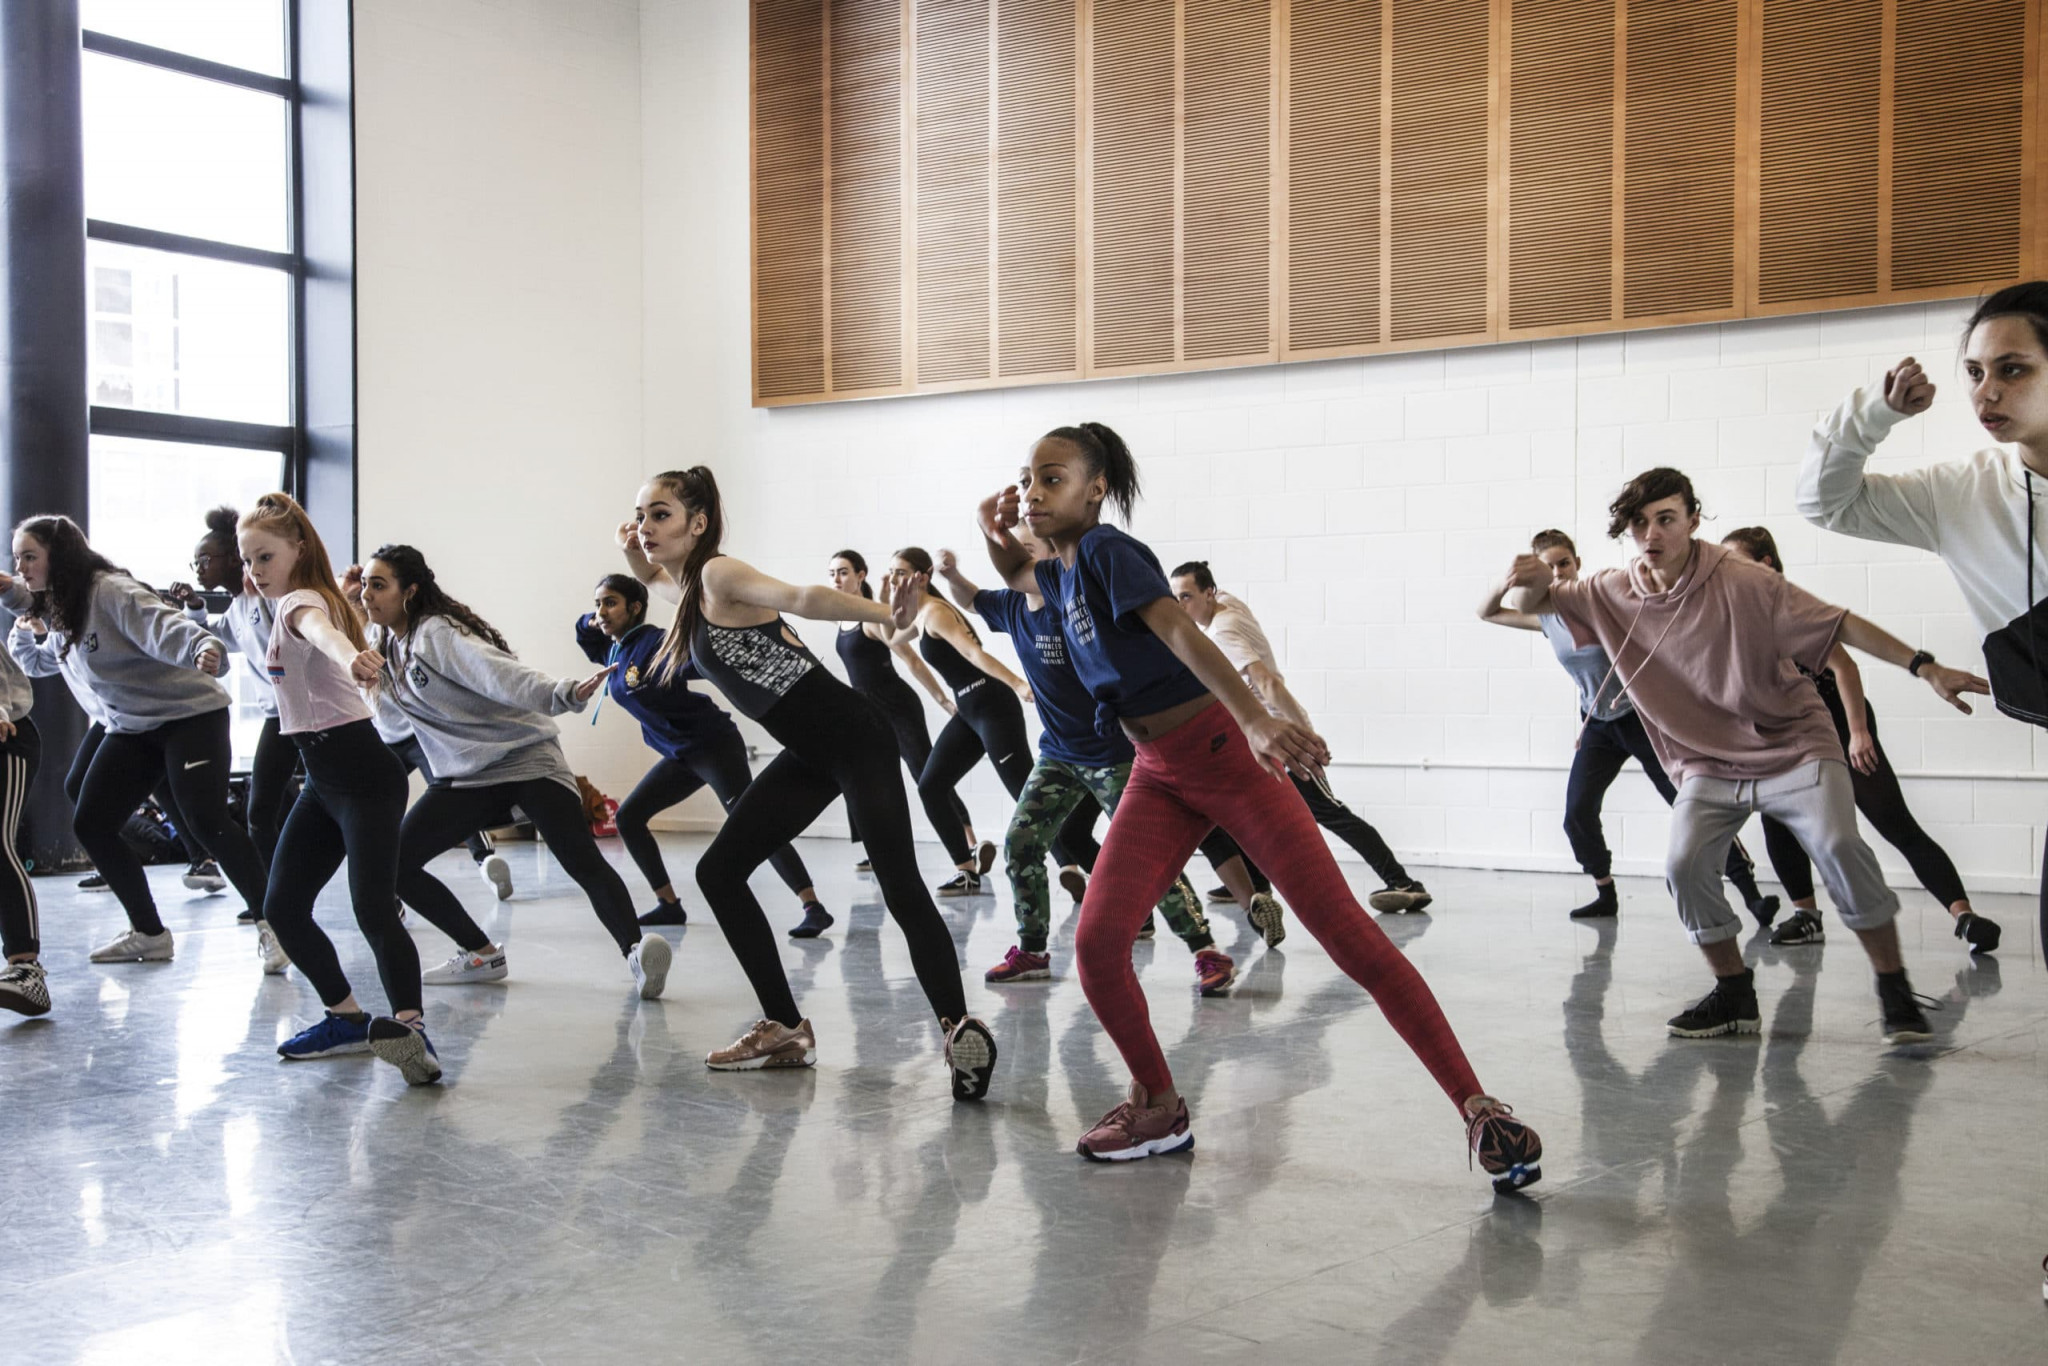 Birmingham 2022 Cultural Festival awarded funding for Ceremonies dancing